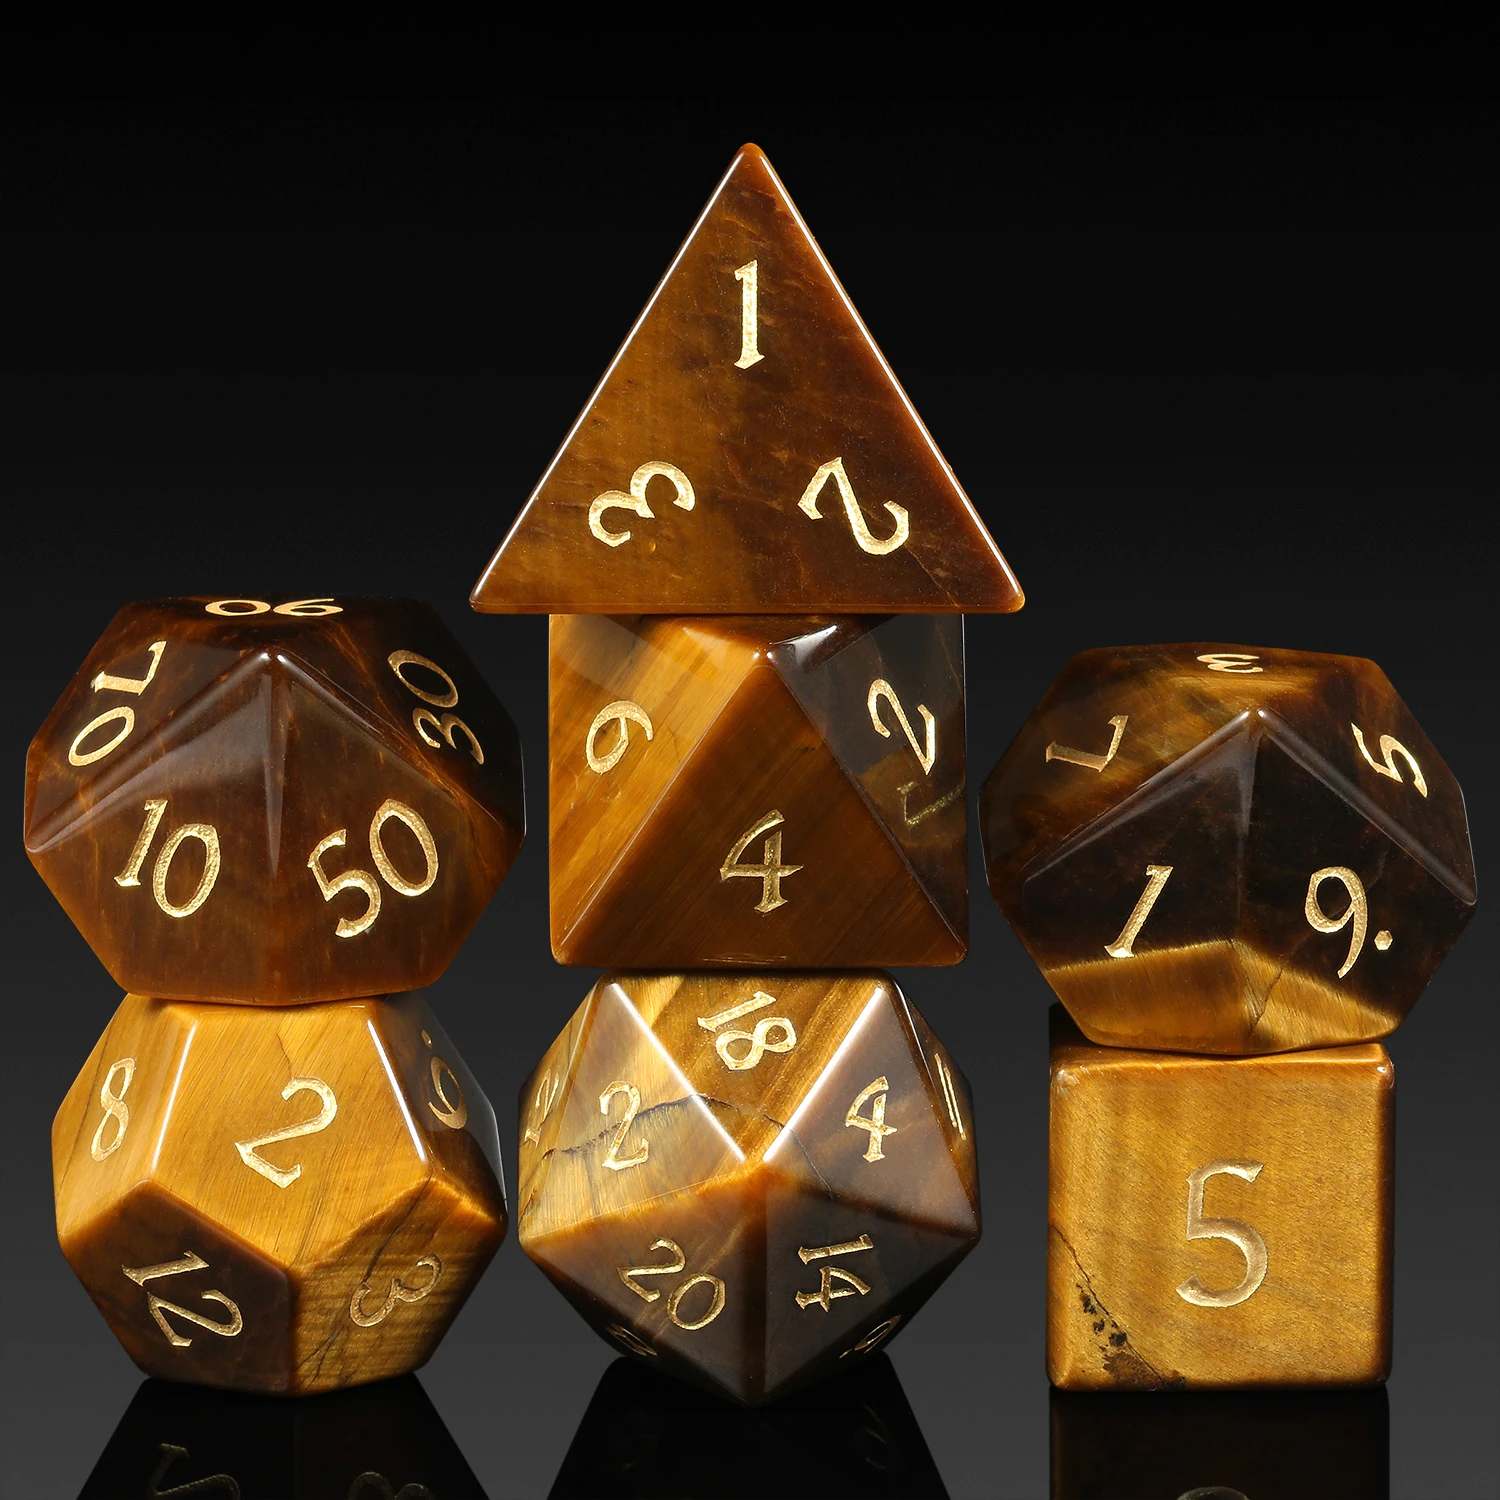 

Wholesale Natural gemstone Dice Custom DND Gem Dice Polyhedral Stone Dice Set for RPG games Tigerite(Tiger's Eye)